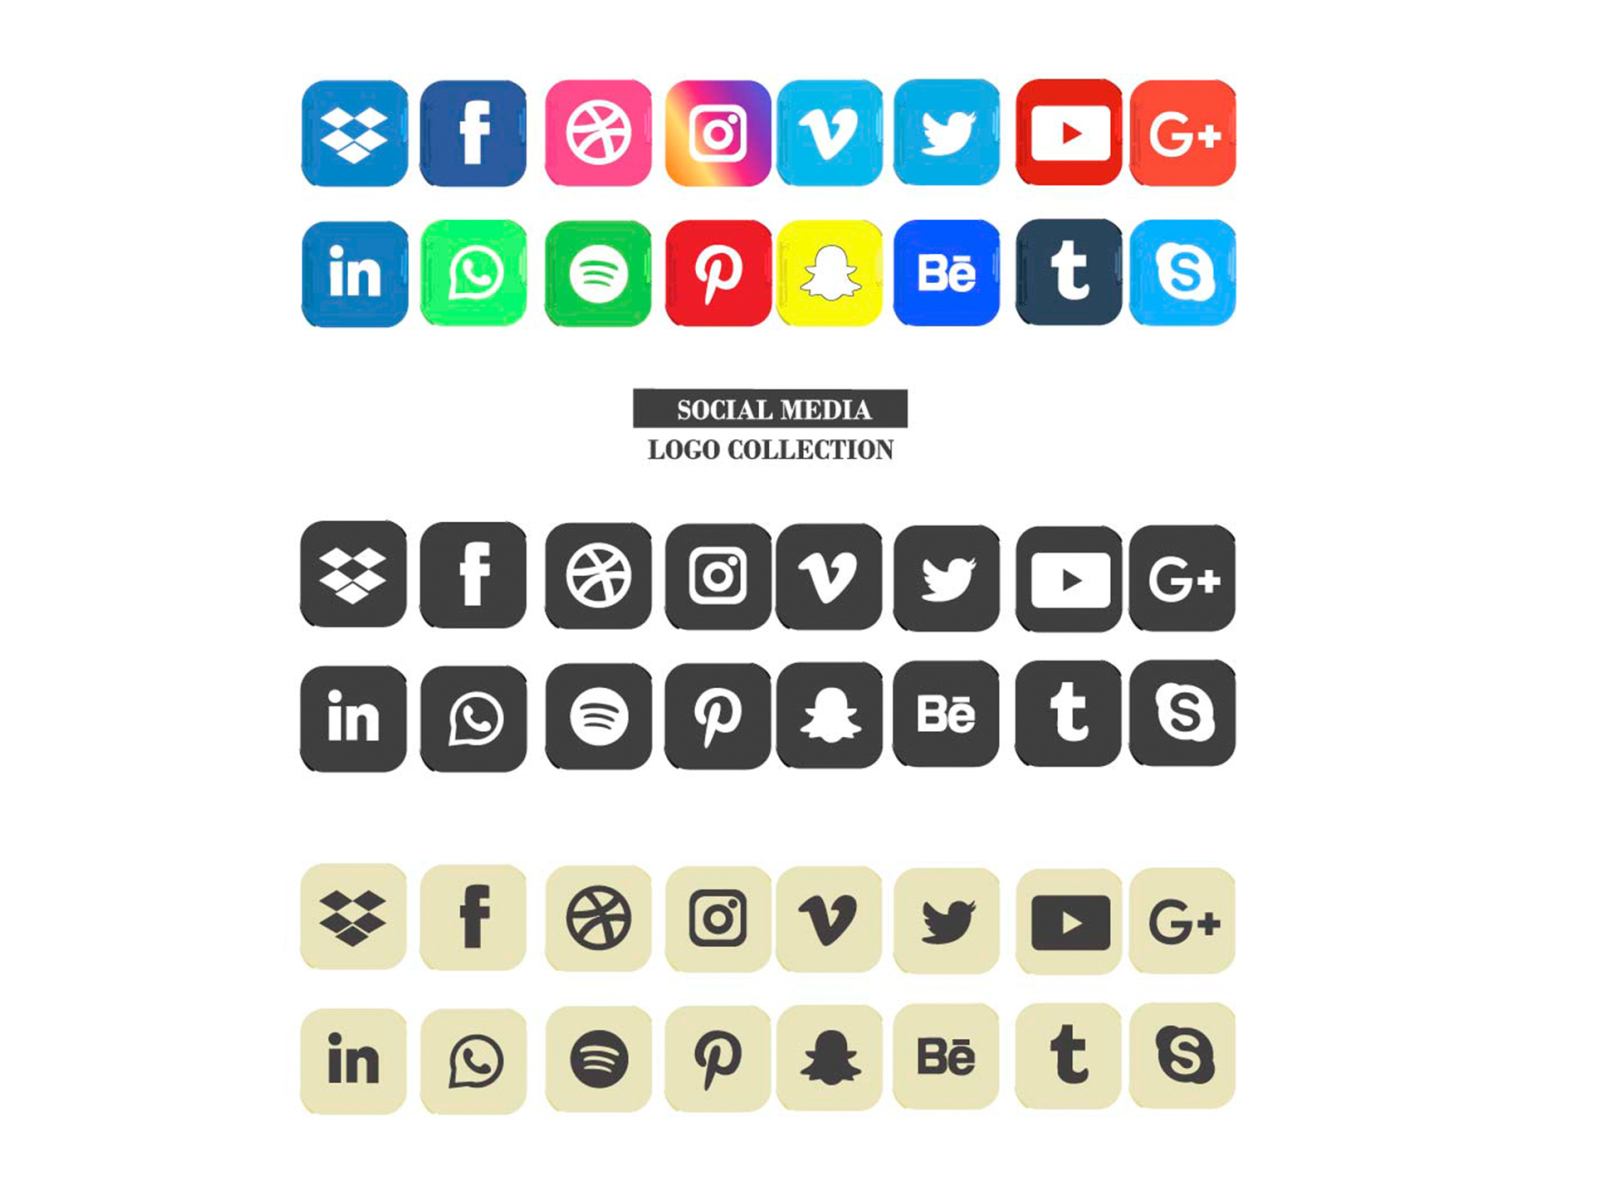 Social Media Logos Illustration by Fenny Apriliani on Dribbble